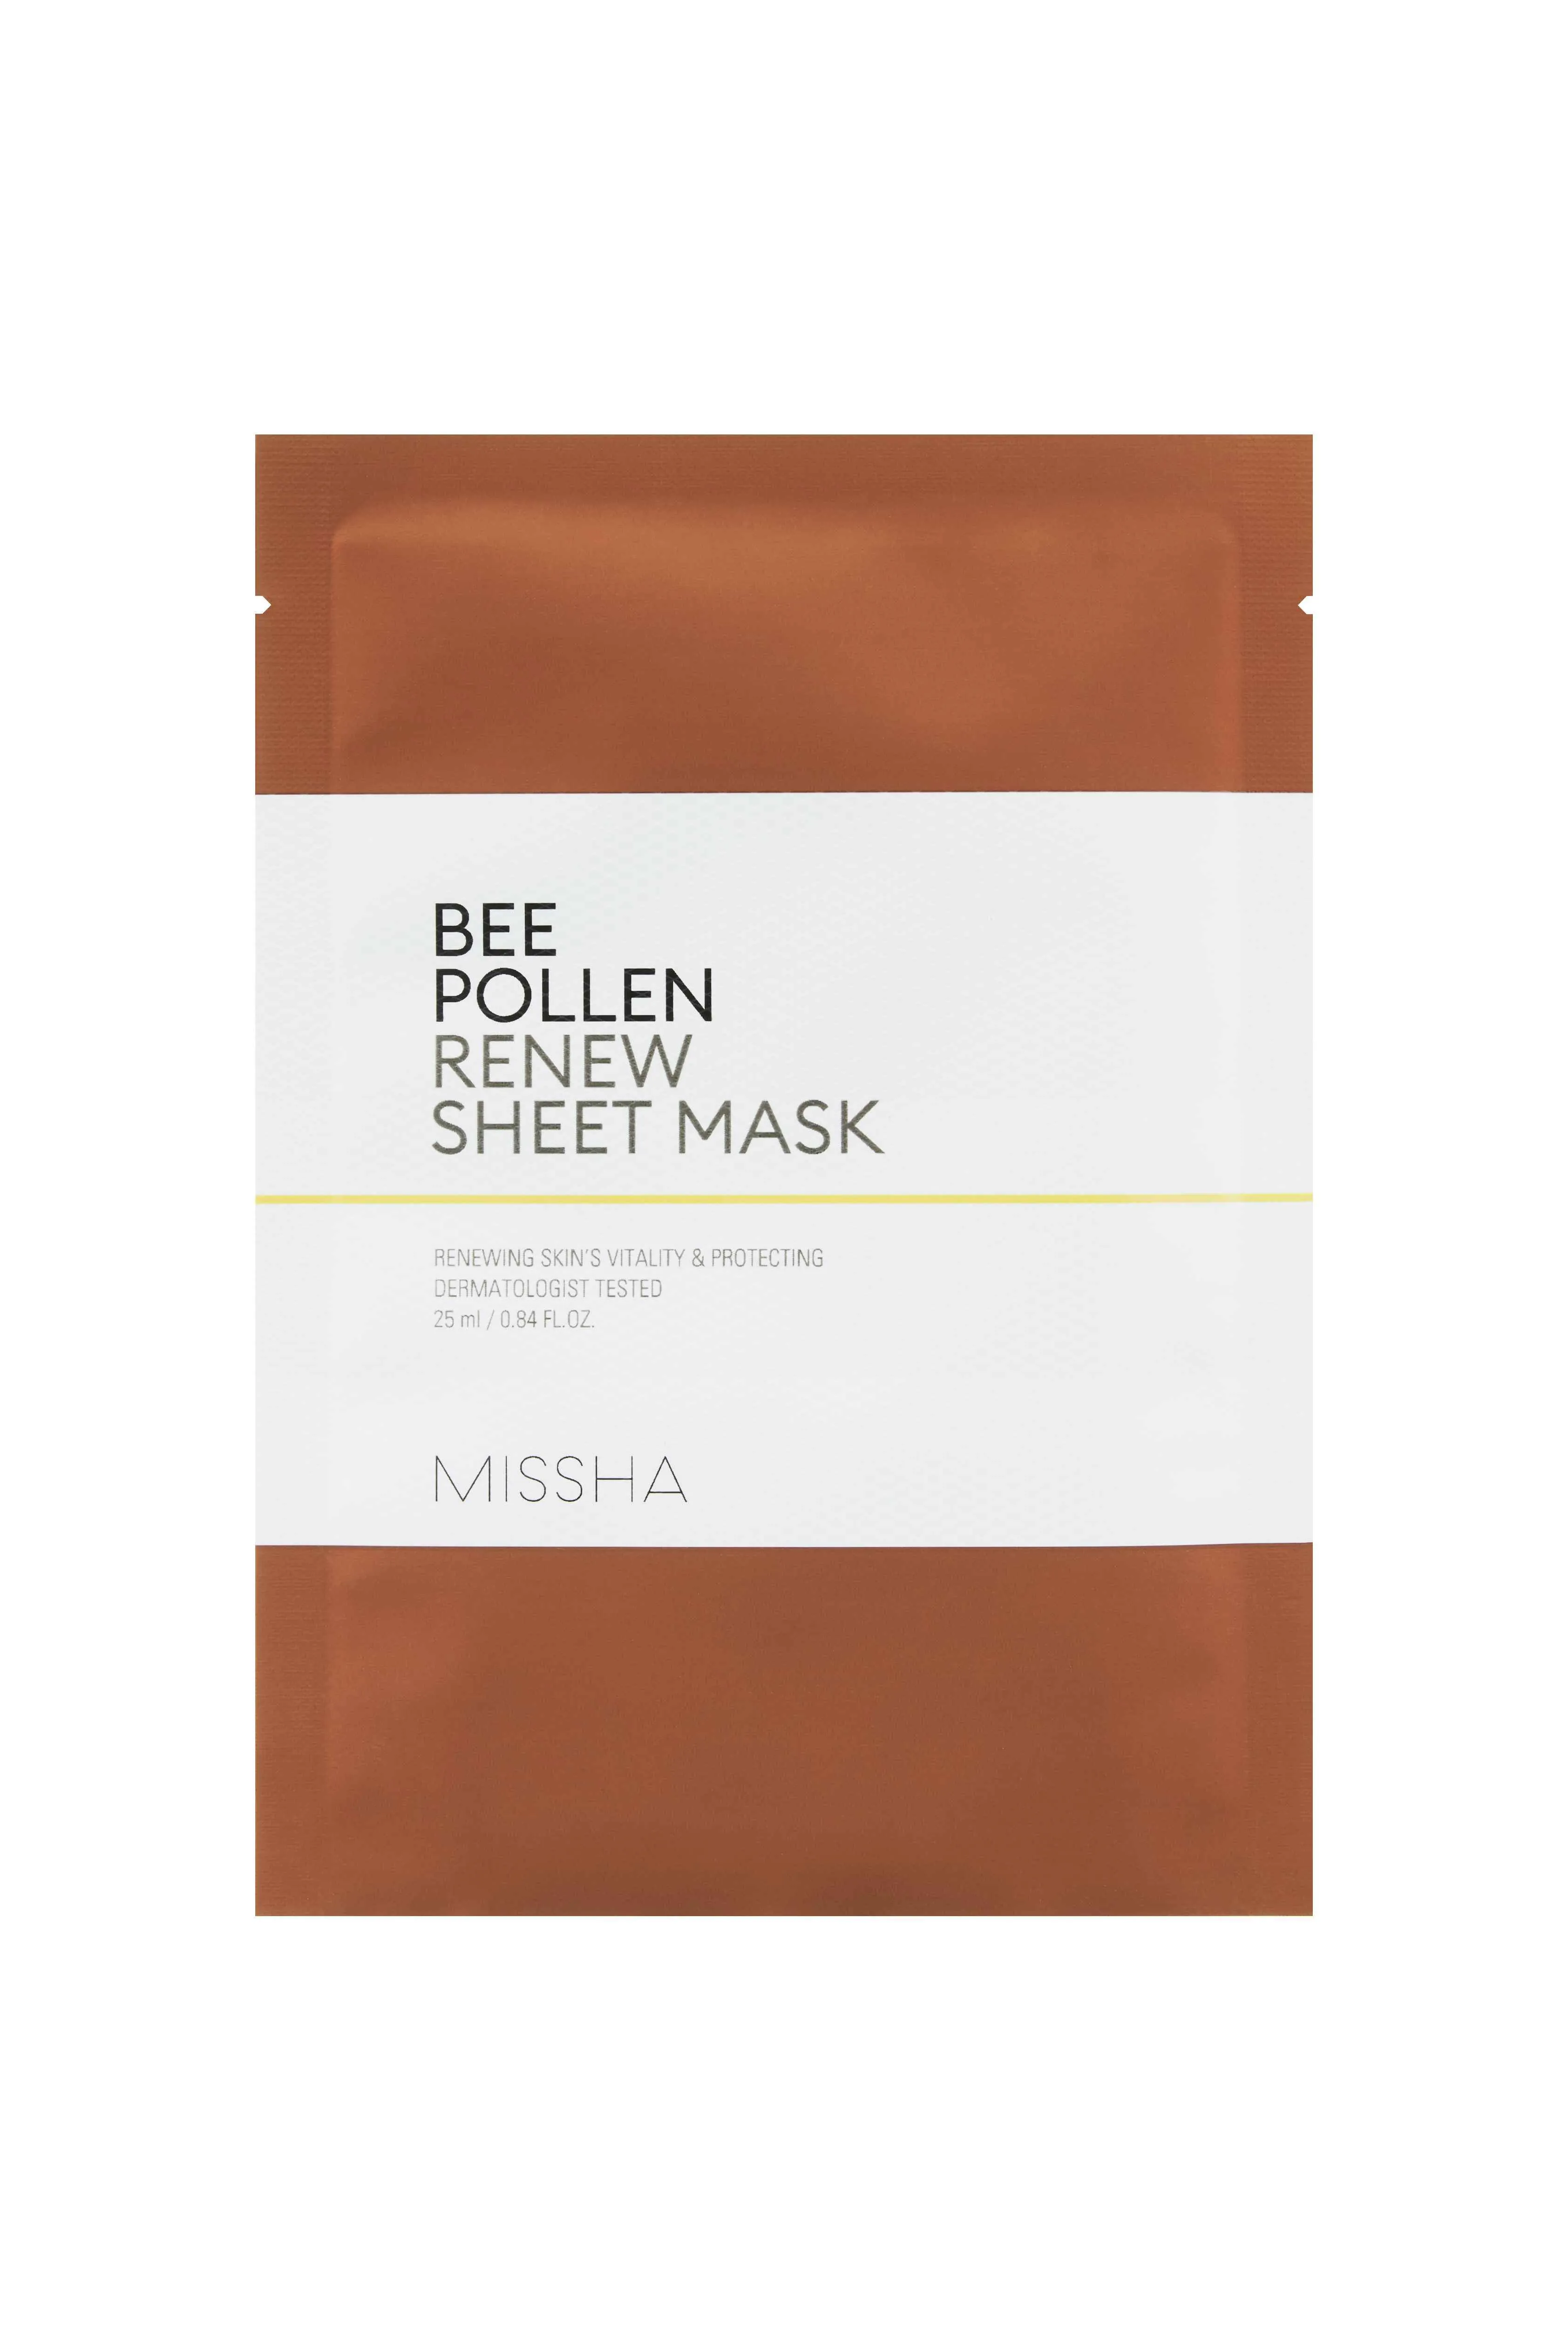 Missha Bee Pollen Renew Sheet Mask 25 ml / 1 sheet